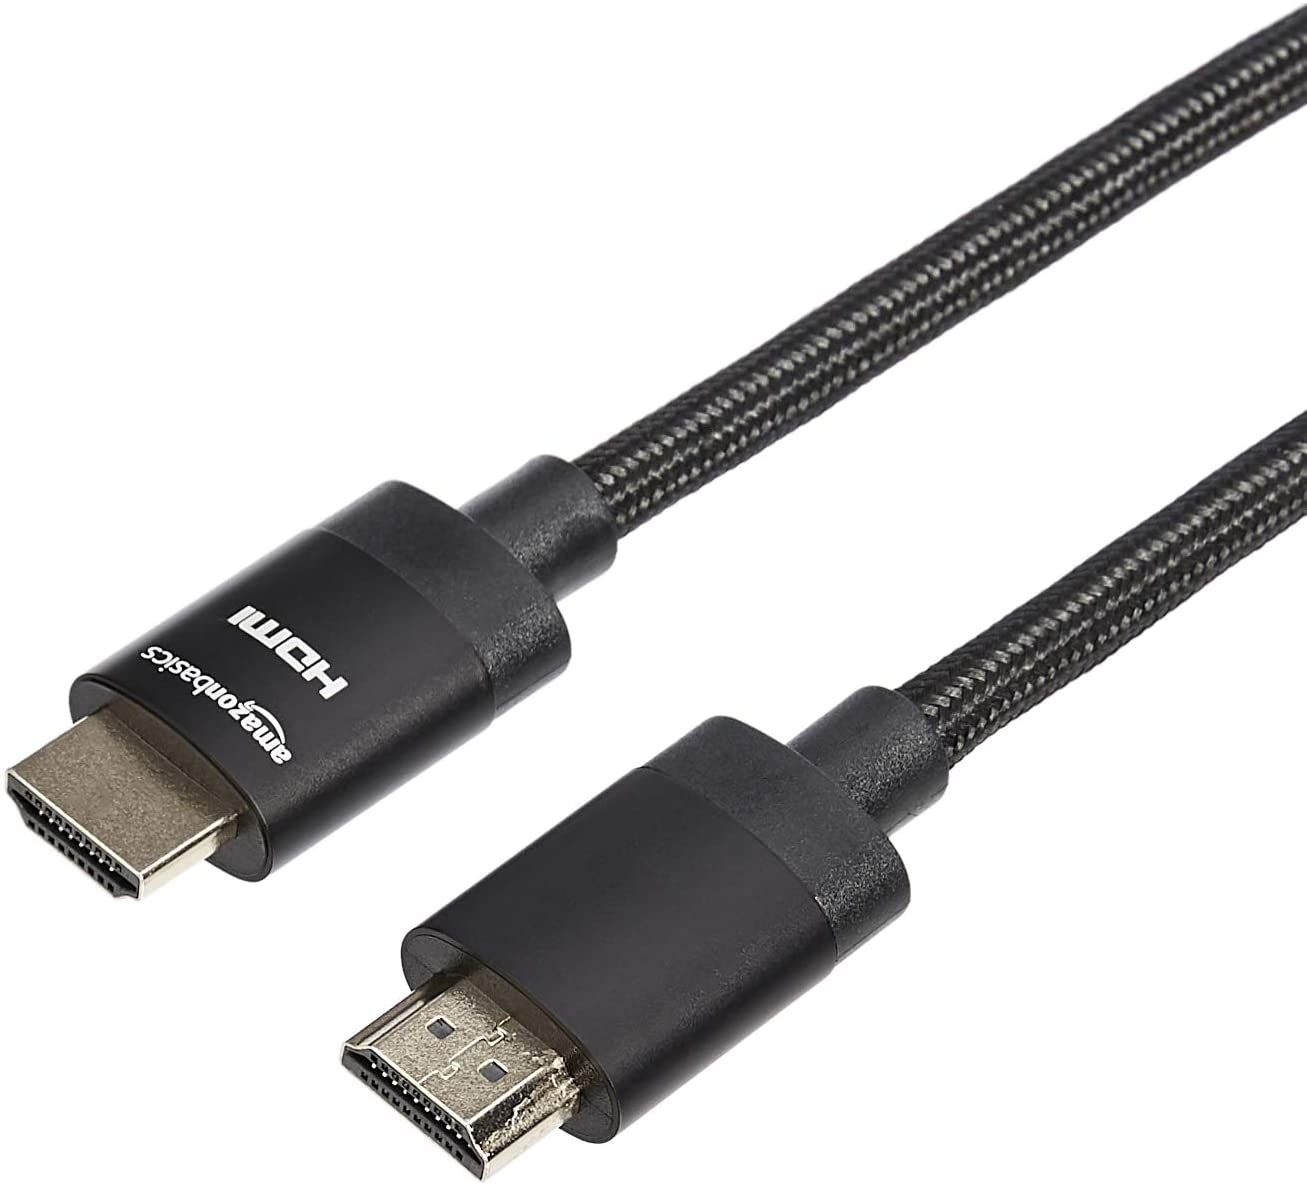 MAYA™ Ultra High Speed HDMI Cable